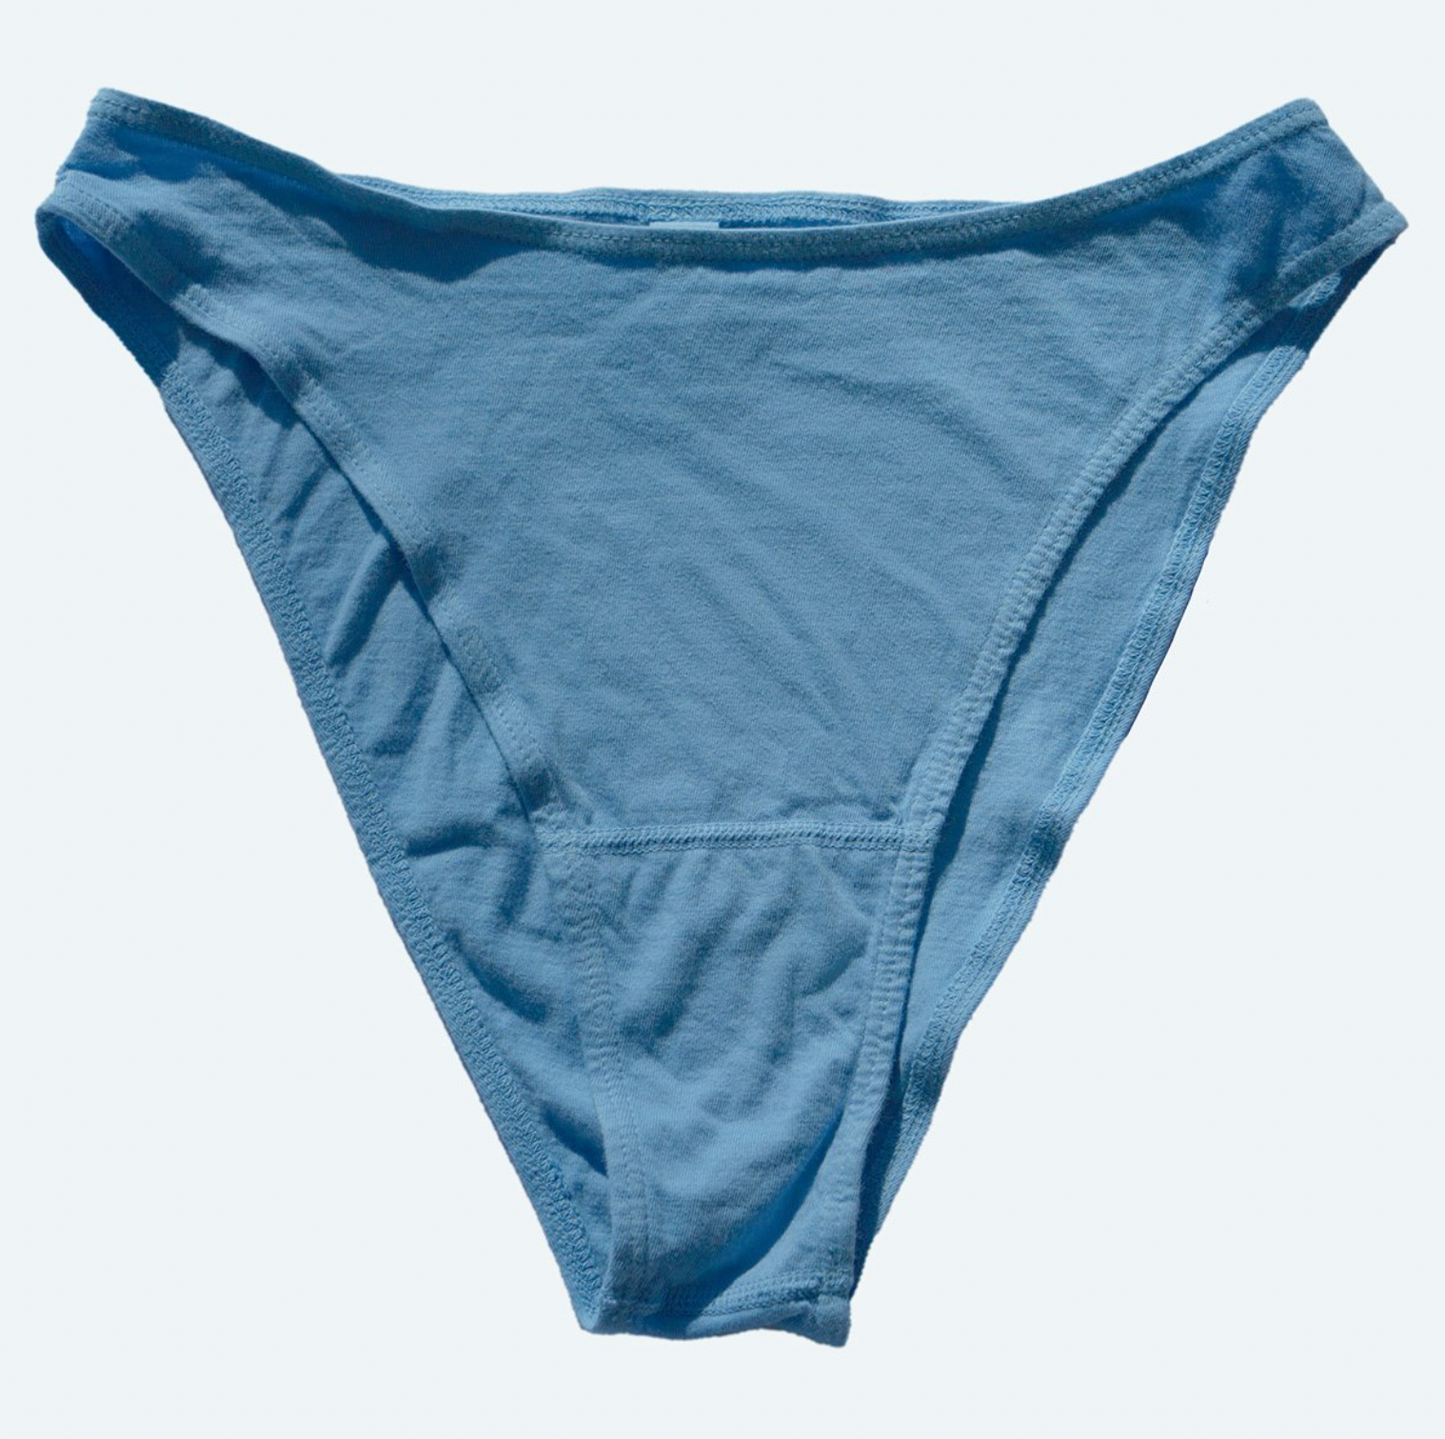 Buy Blue Leaf Cotton Plain Underwear Panties Regular Size 6 Pack